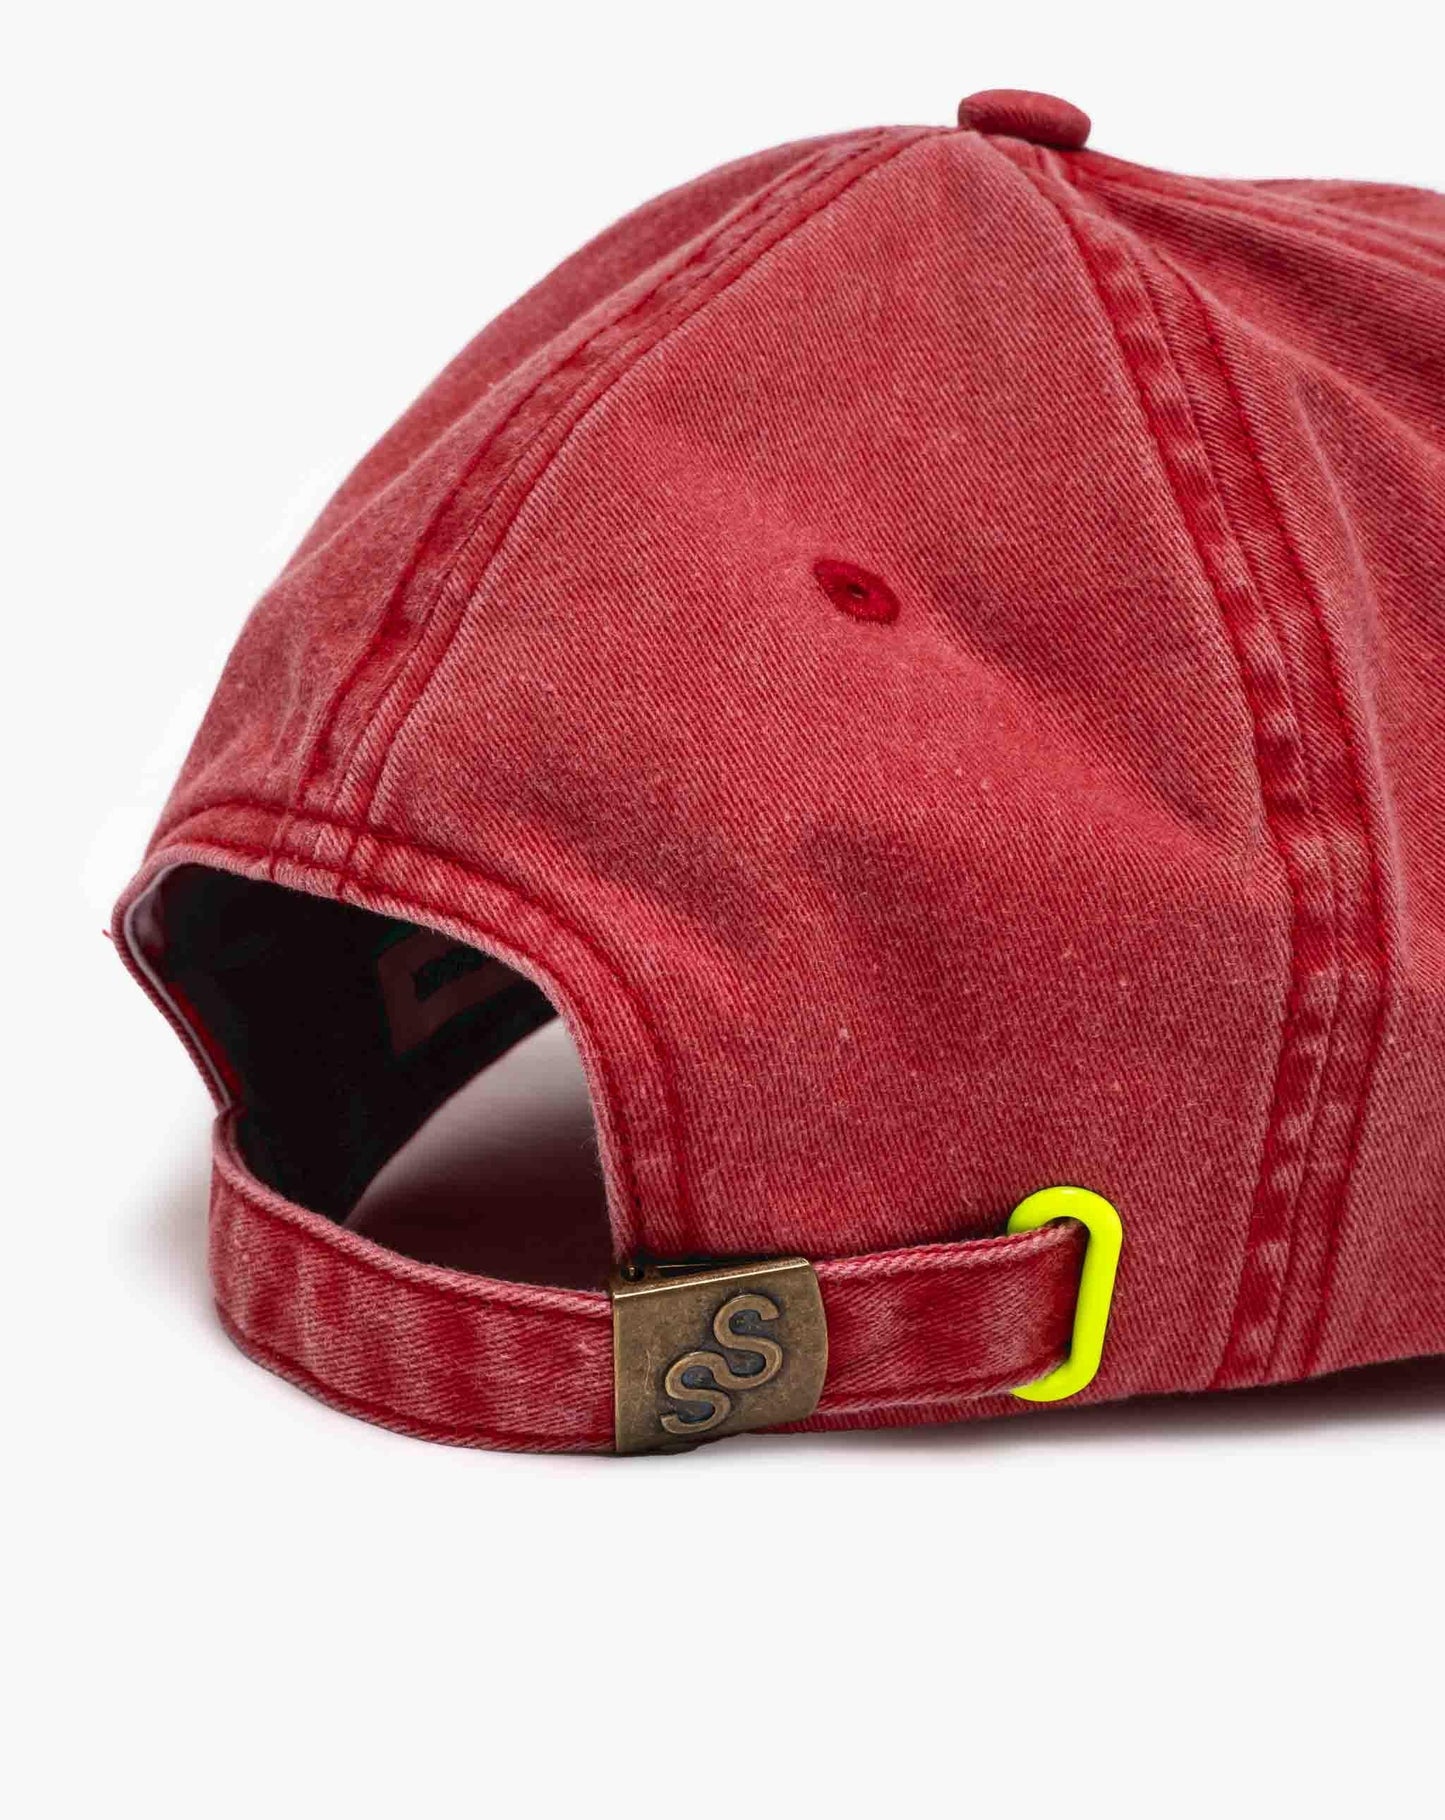 SAINT&SUMMER Logo Cap - Red Headwear